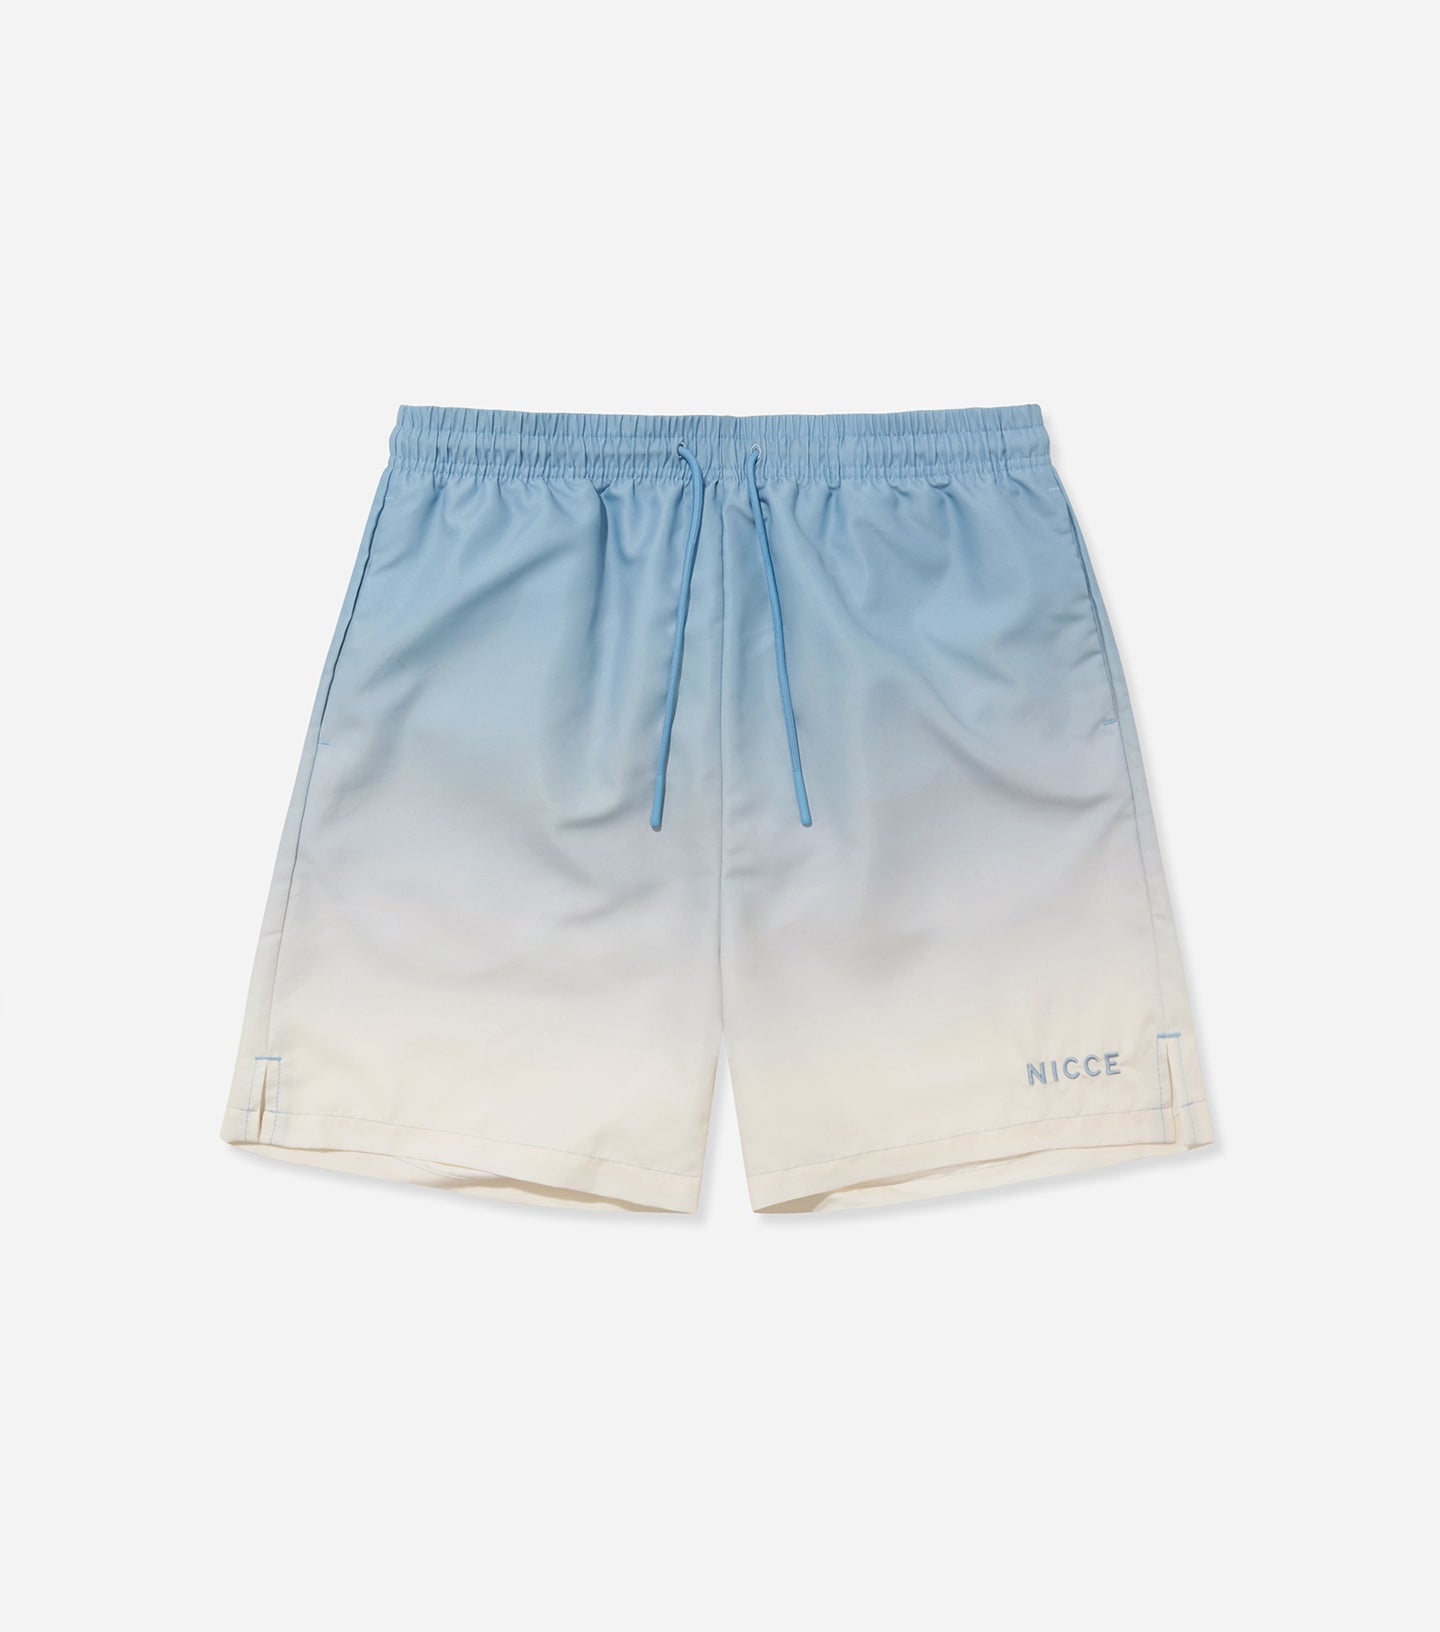 Nicce Mens Eaves Swim Shorts-Allure Blue/Sandshell